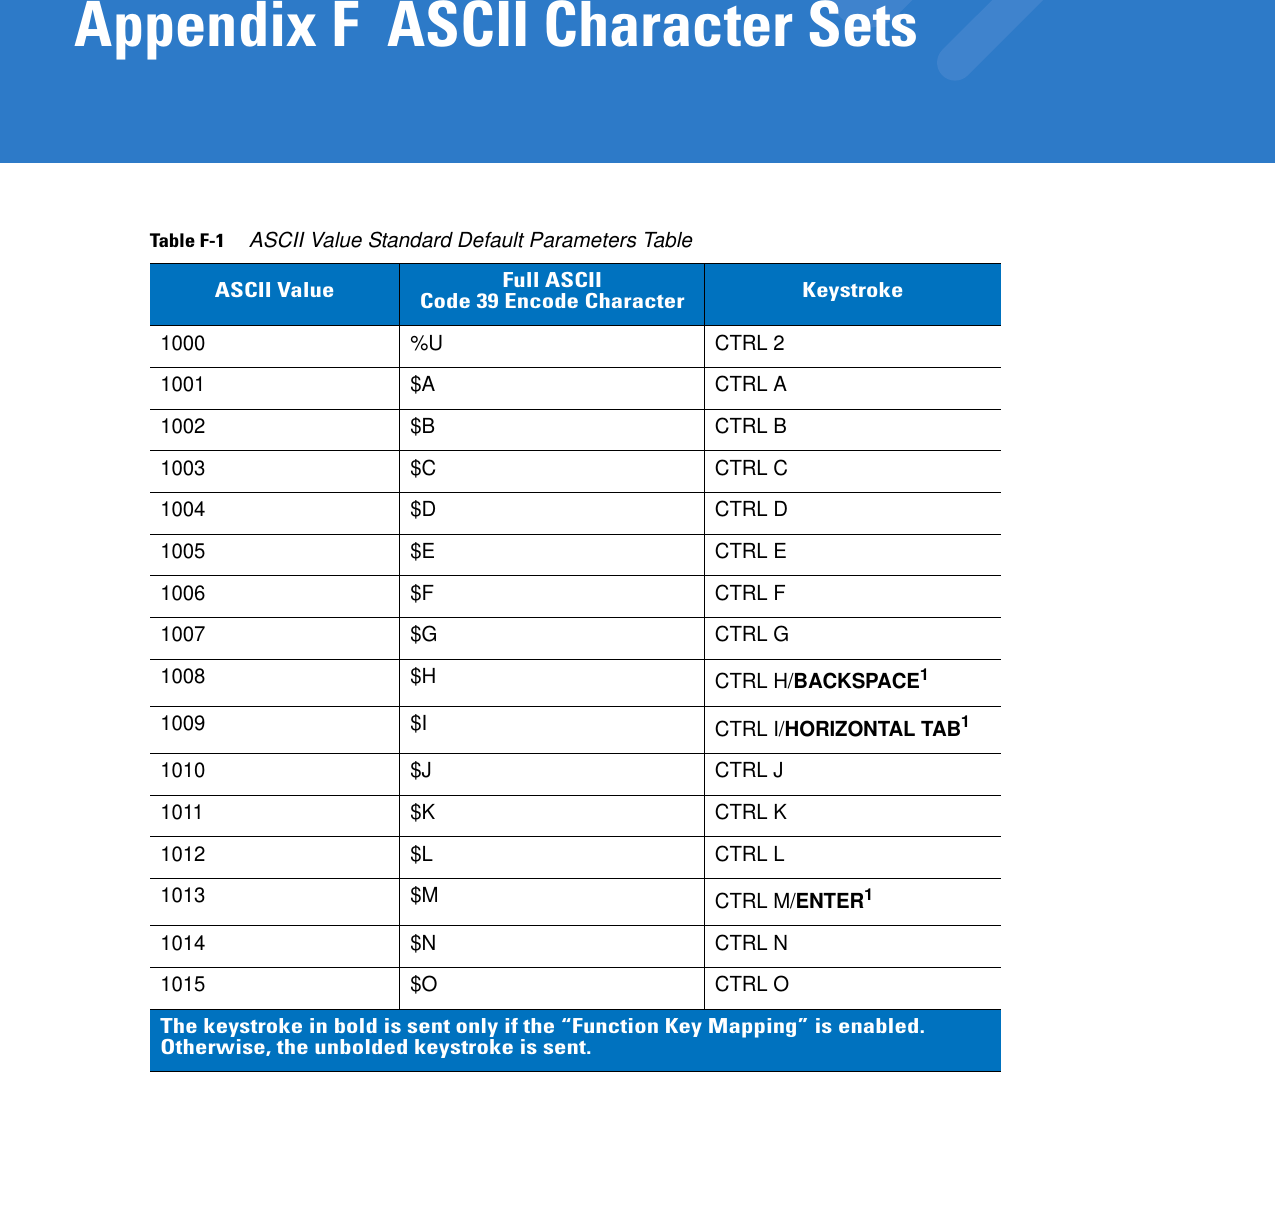 Appendix F  ASCII Character SetsTable F-1     ASCII Value Standard Default Parameters TableASCII Value Full ASCIICode 39 Encode Character Keystroke1000 %U CTRL 21001 $A CTRL A1002 $B CTRL B1003 $C CTRL C1004 $D CTRL D1005 $E CTRL E1006 $F CTRL F1007 $G CTRL G1008 $H CTRL H/BACKSPACE11009 $I CTRL I/HORIZONTAL TAB11010 $J CTRL J1011 $K CTRL K1012 $L CTRL L1013 $M CTRL M/ENTER11014 $N CTRL N1015 $O CTRL OThe keystroke in bold is sent only if the “Function Key Mapping” is enabled. Otherwise, the unbolded keystroke is sent.